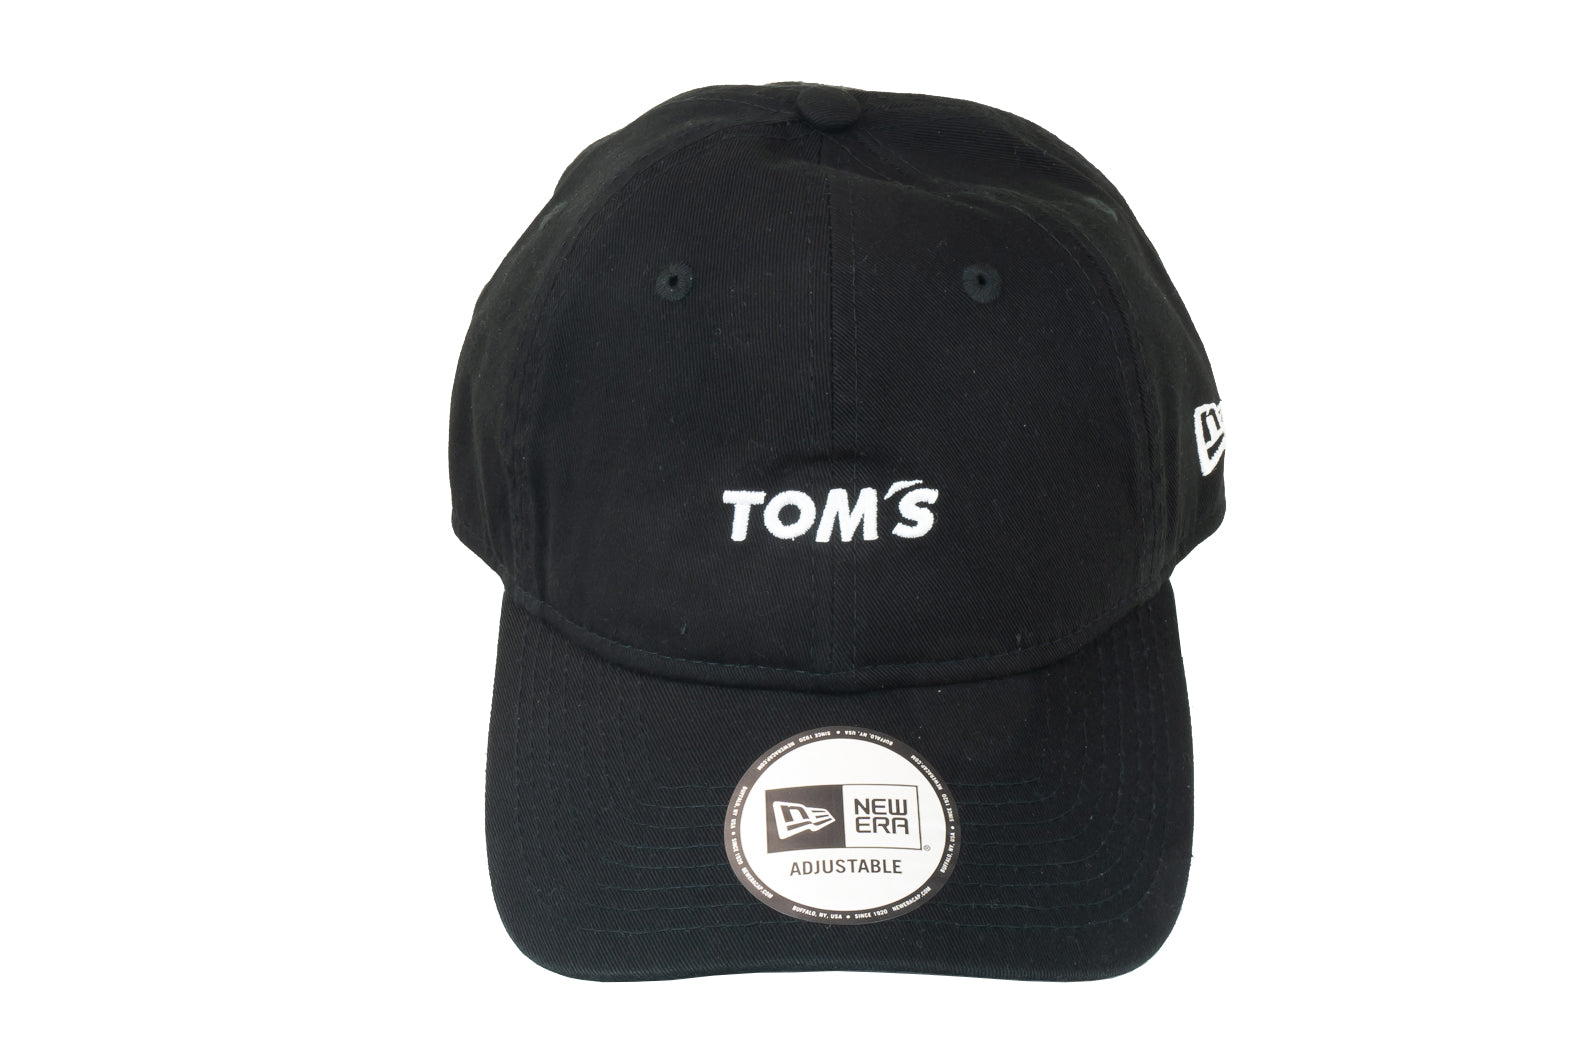 TOM'S Racing - TOM'S Logo New Era Hat (930) Adjustable